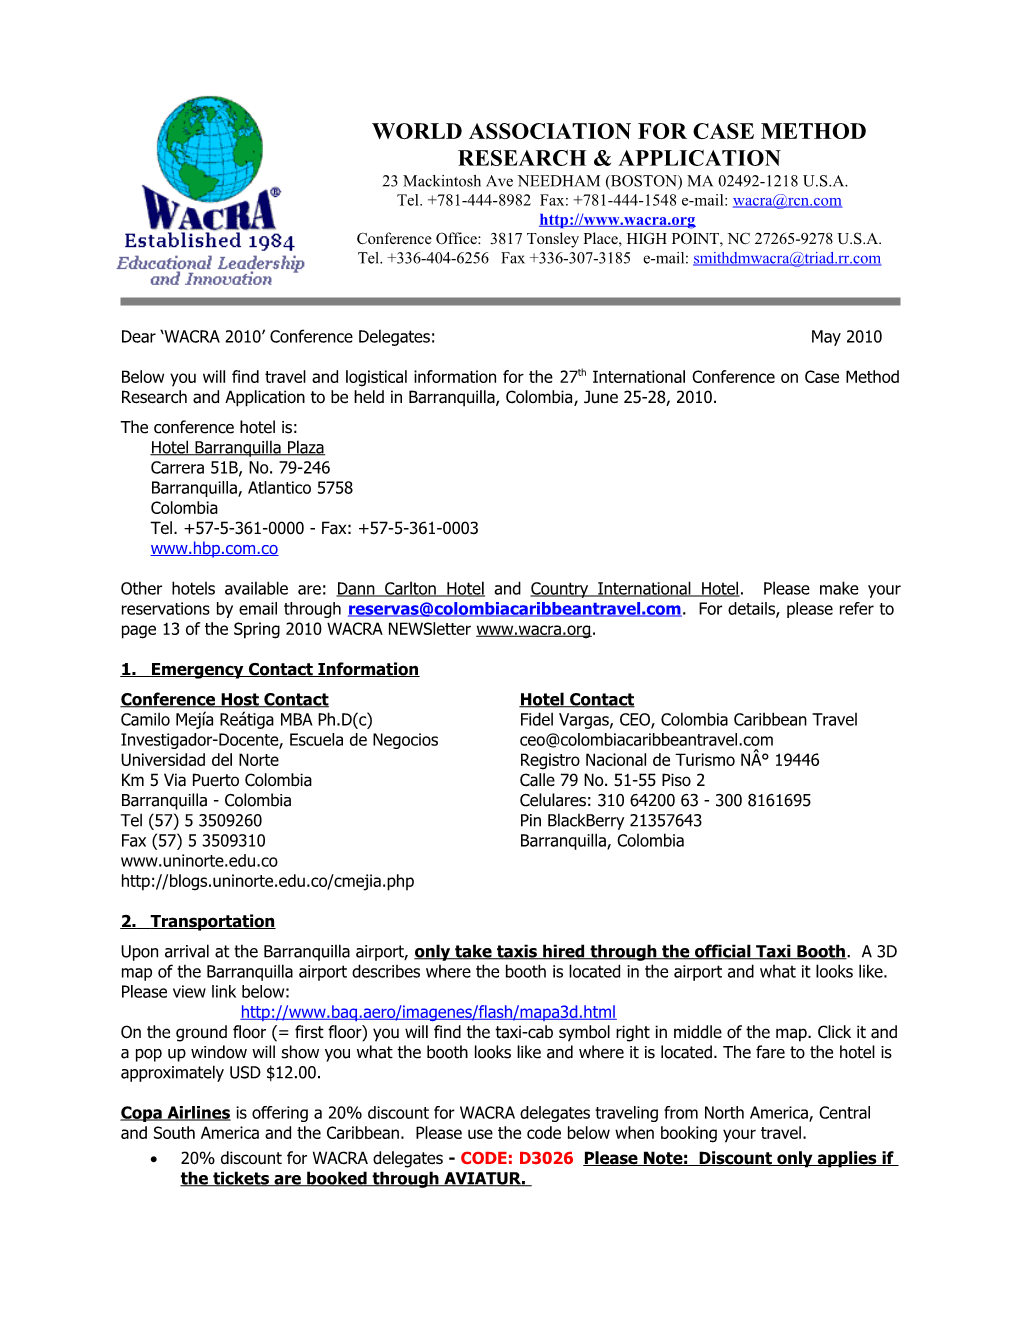 WACRA Conference Travel Letter